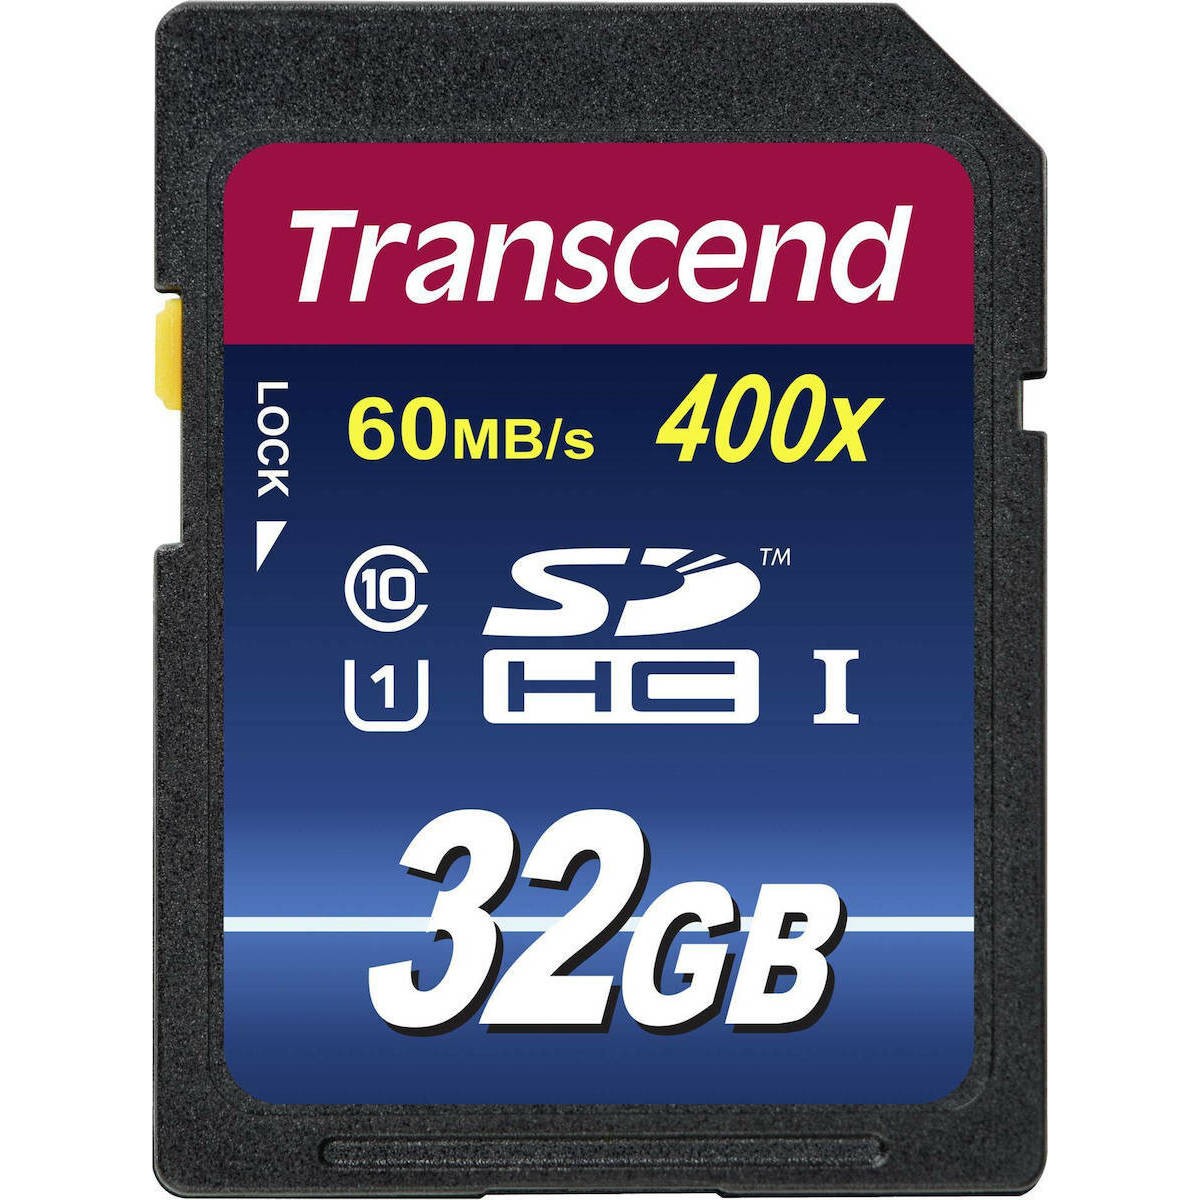 SDHC TRANSCEND 32GB 400X CLASS 10 U1 UHS-I WITH ADAPTER TS32GSDU1